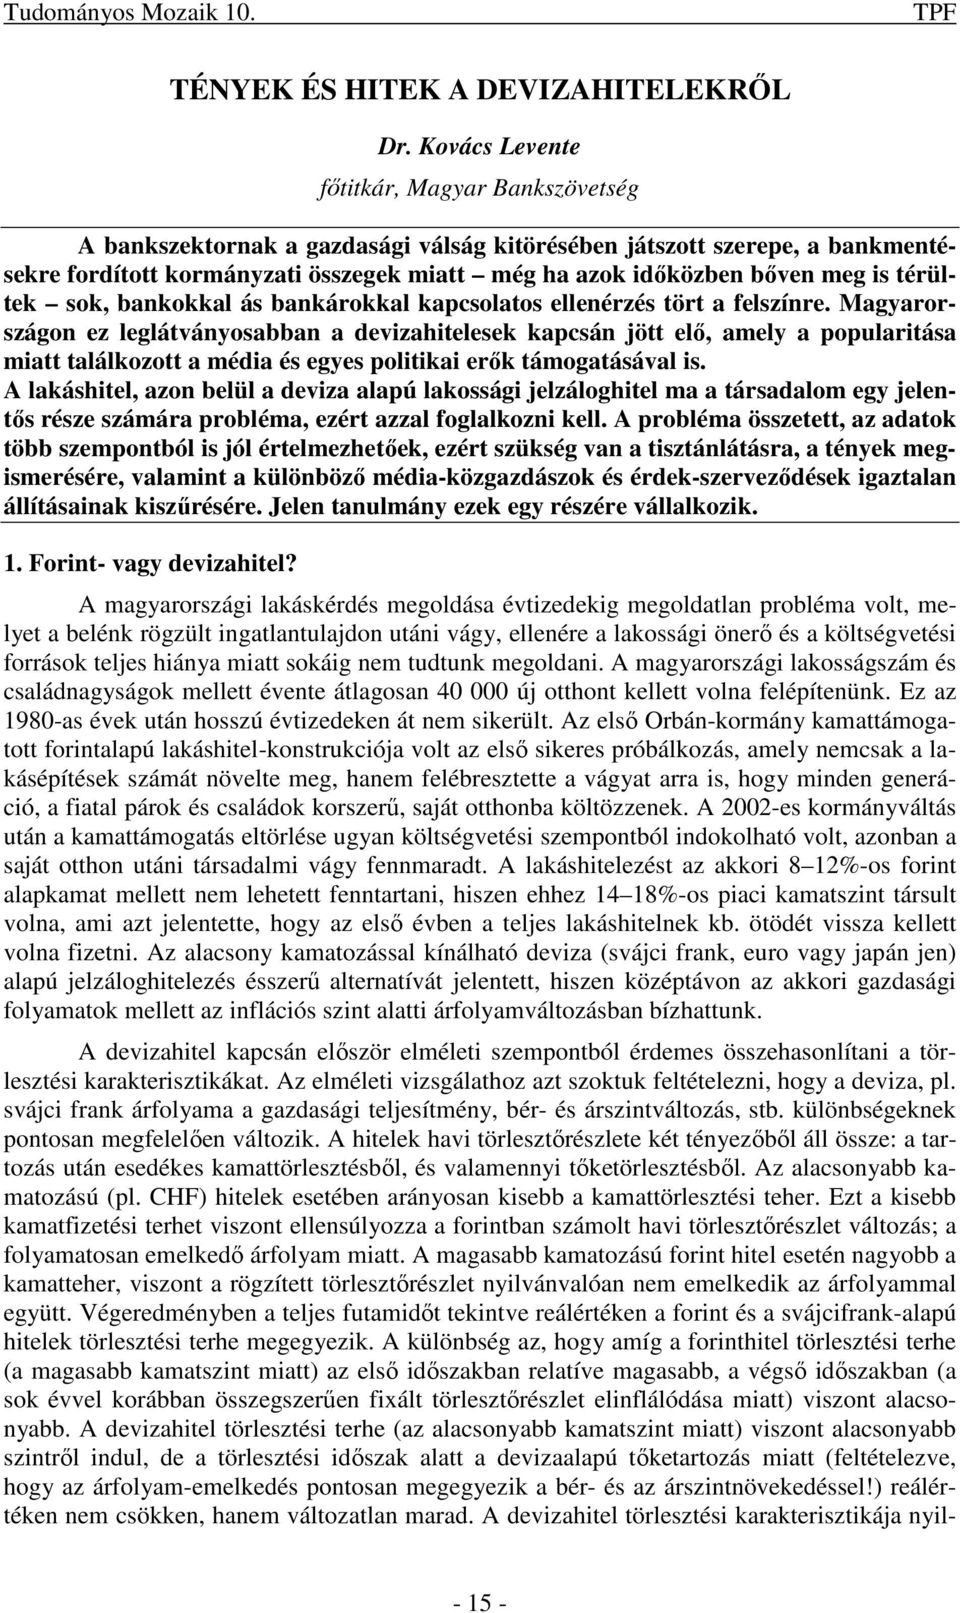 TUDOMÁNYOS MOZAIK 10. kötet - PDF Free Download